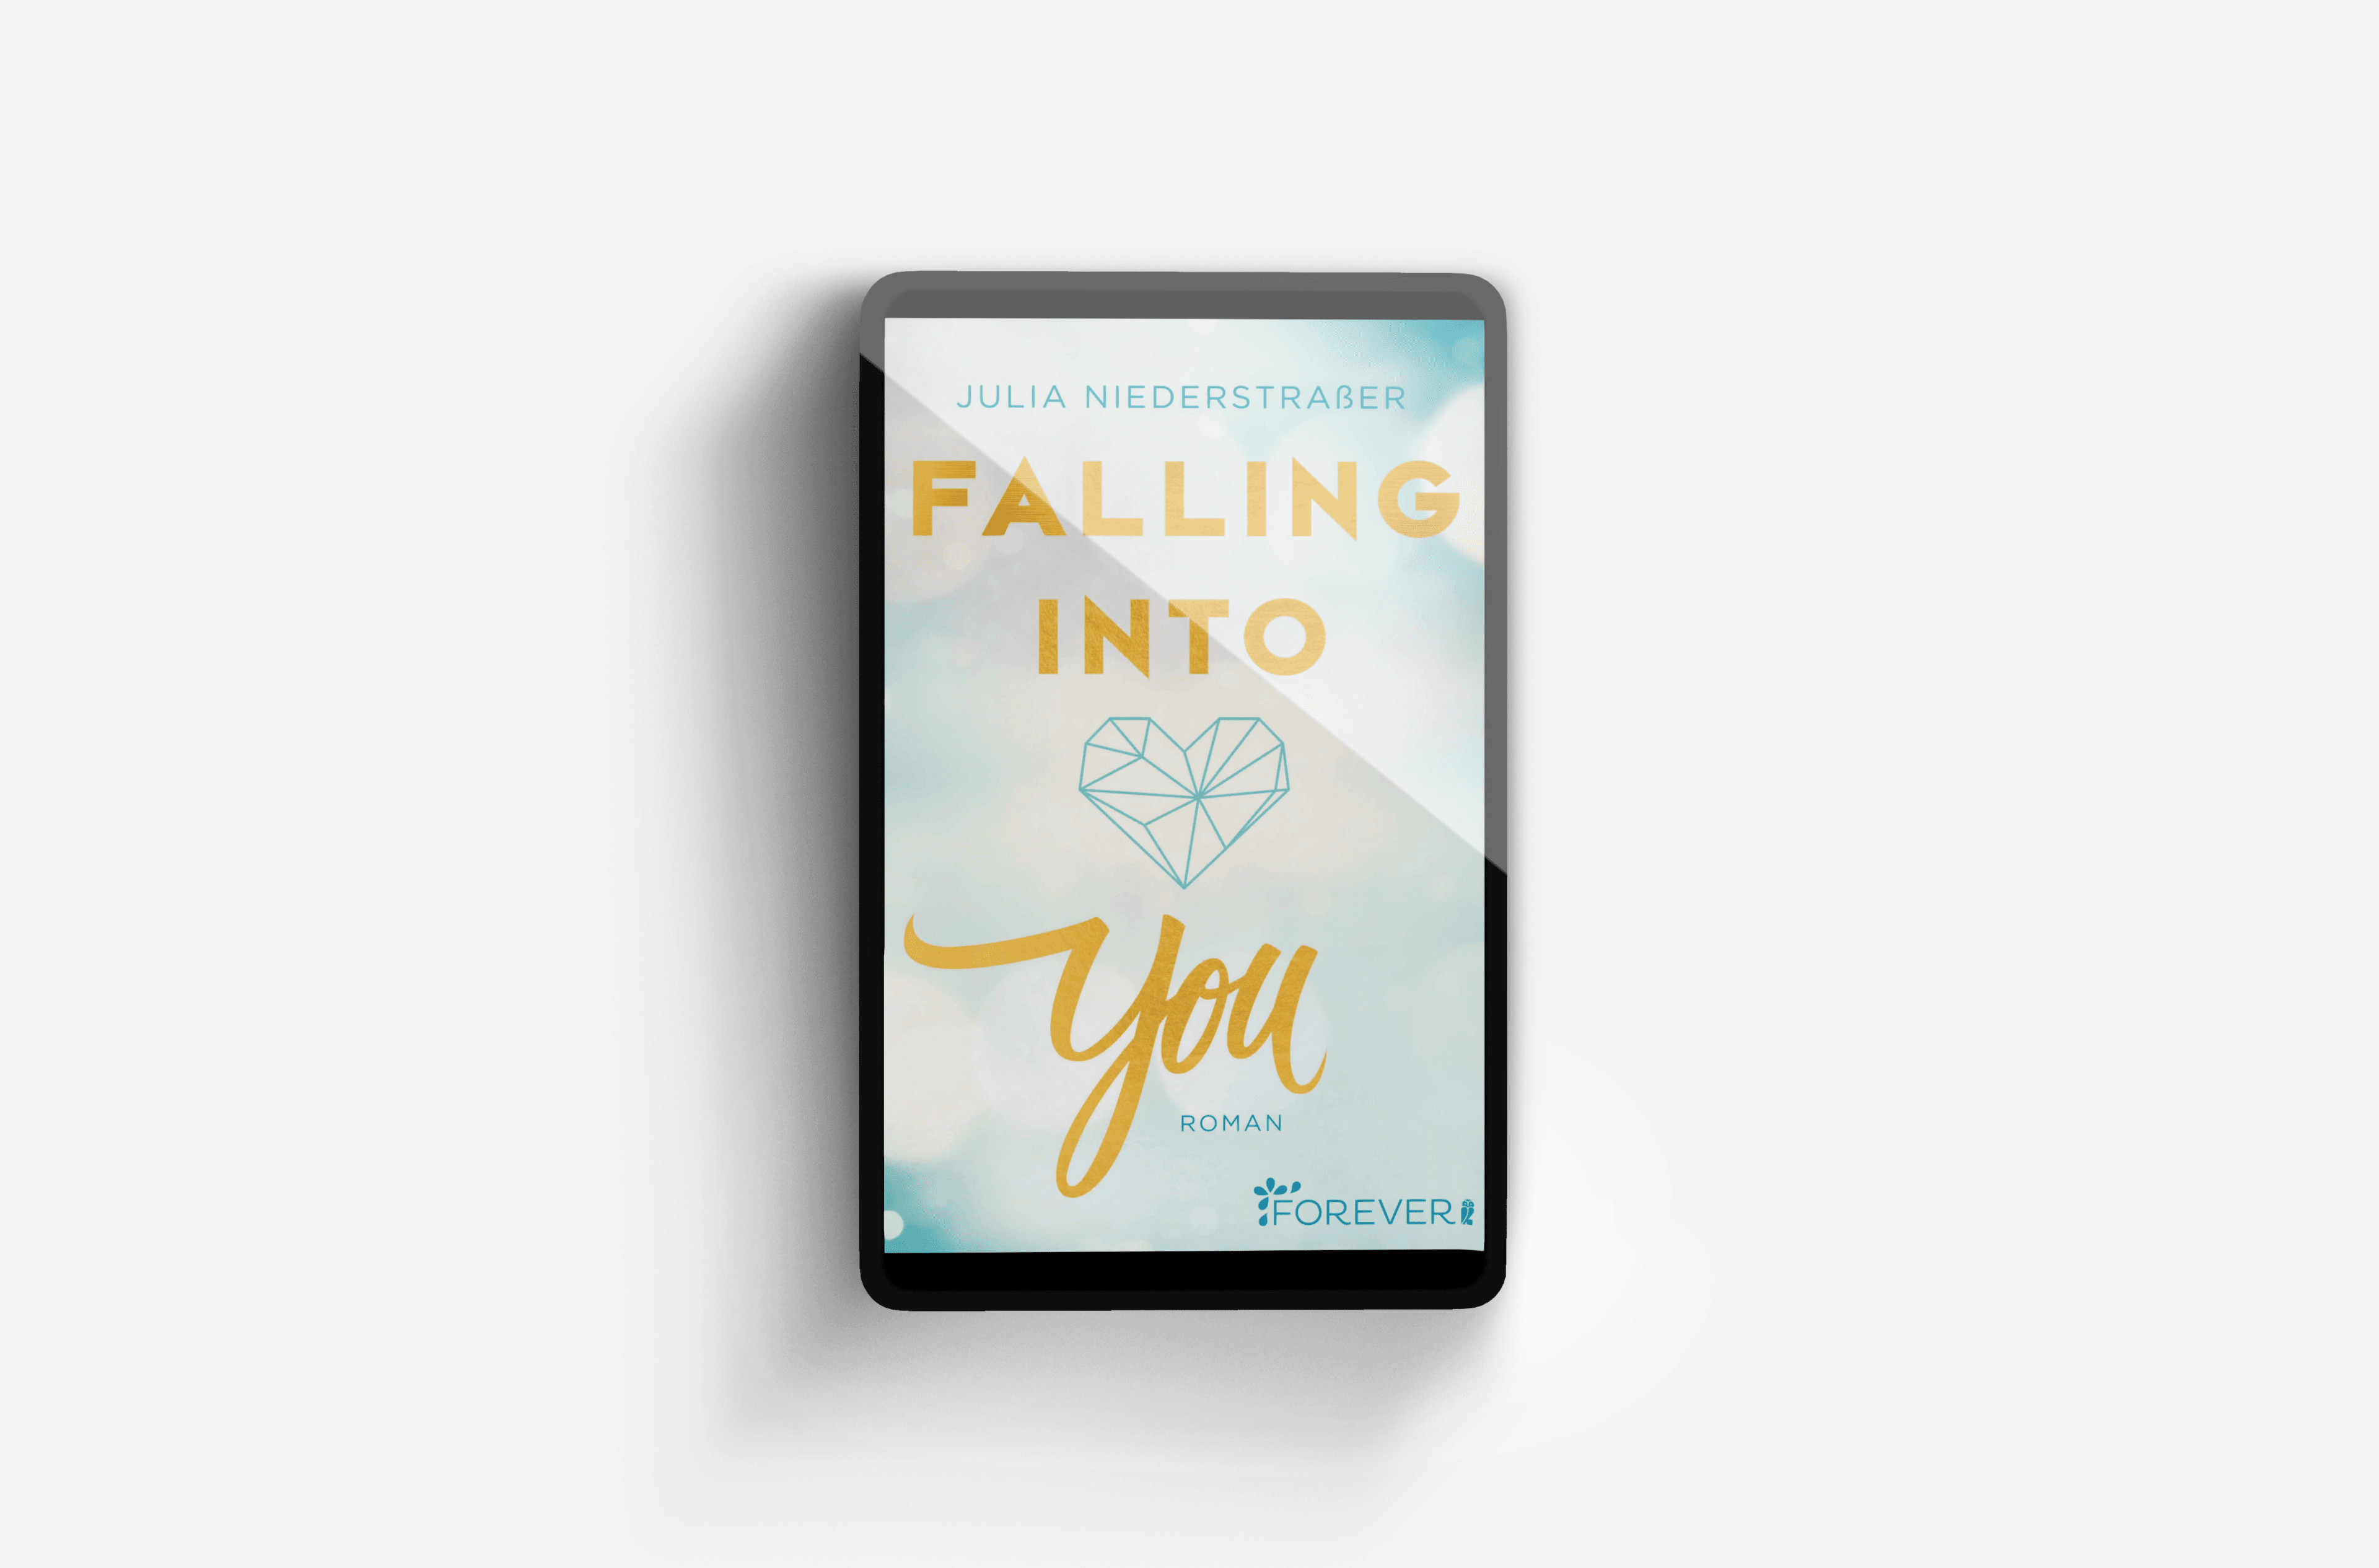 Buchcover von Falling into you